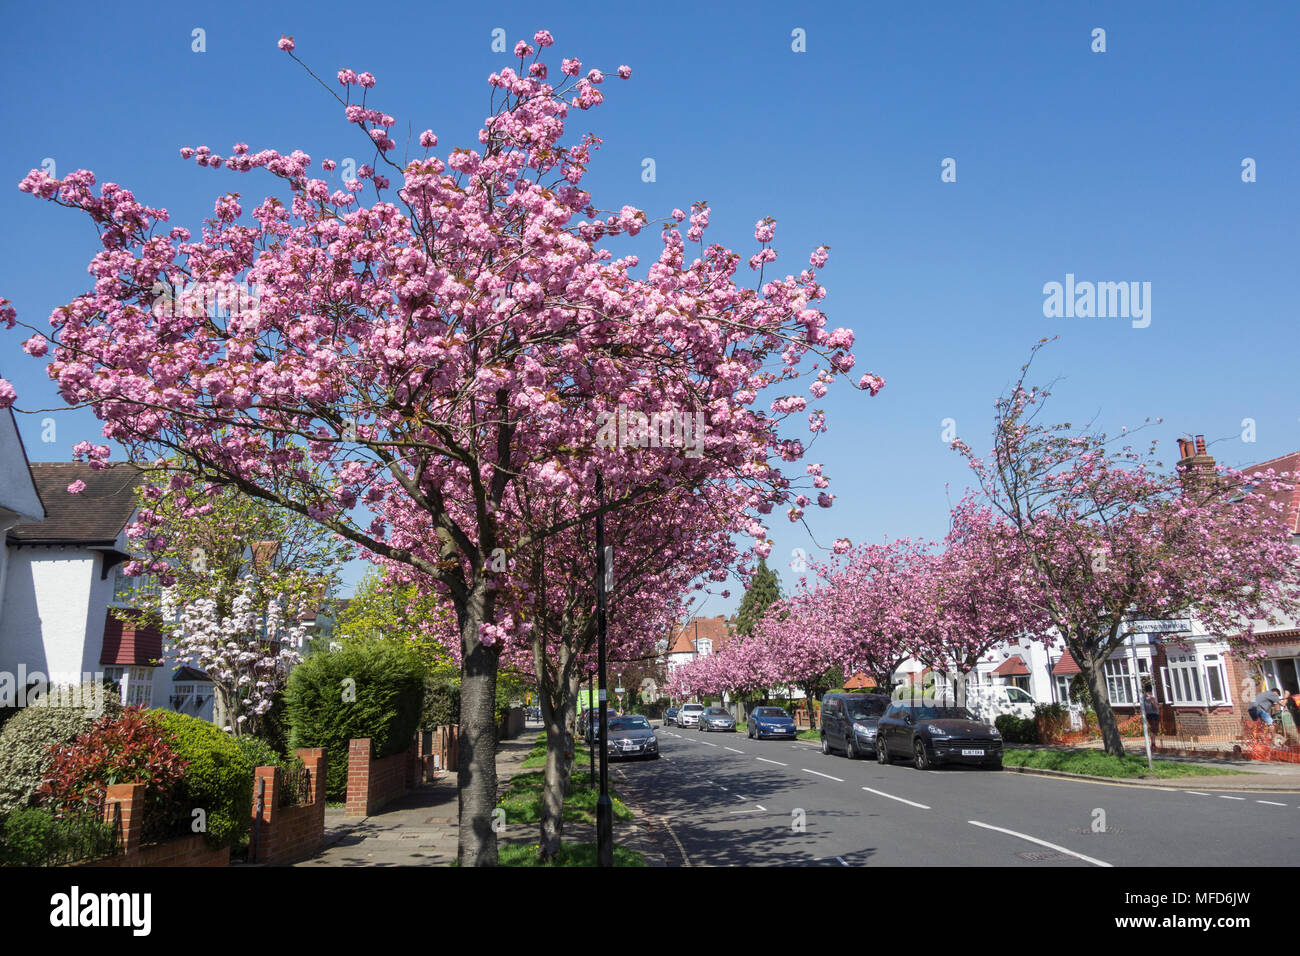 Pink cherry blossom trees (Prunus serrulata) on Staveley Road in Chiswick, west London, UK Stock Photo